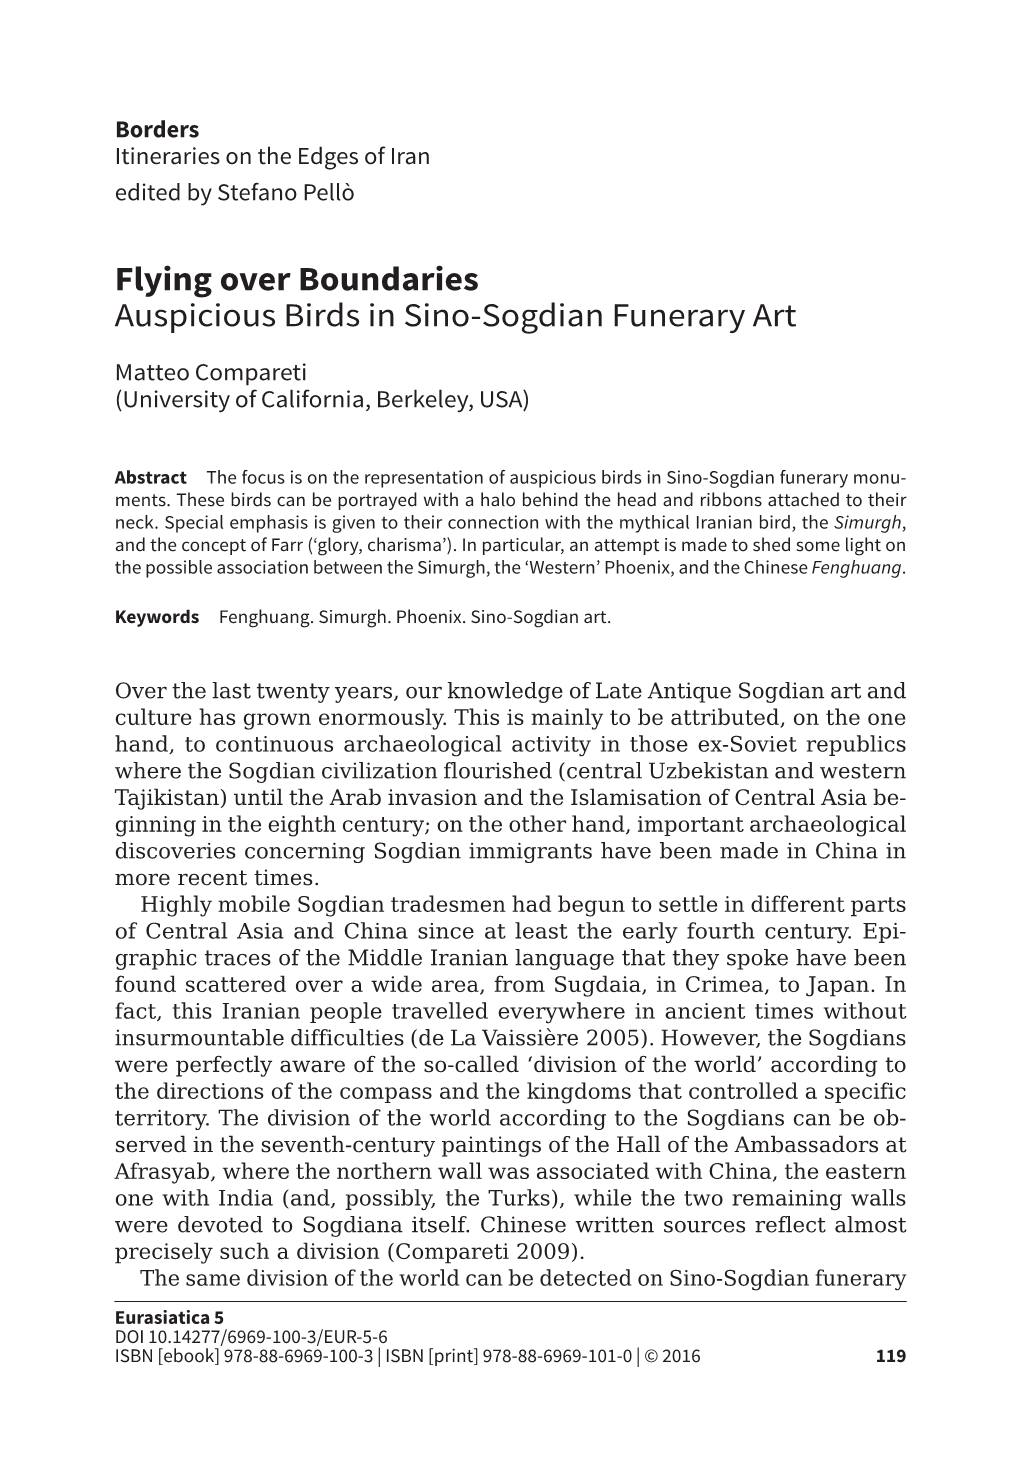 Flying Over Boundaries Auspicious Birds in Sino-Sogdian Funerary Art